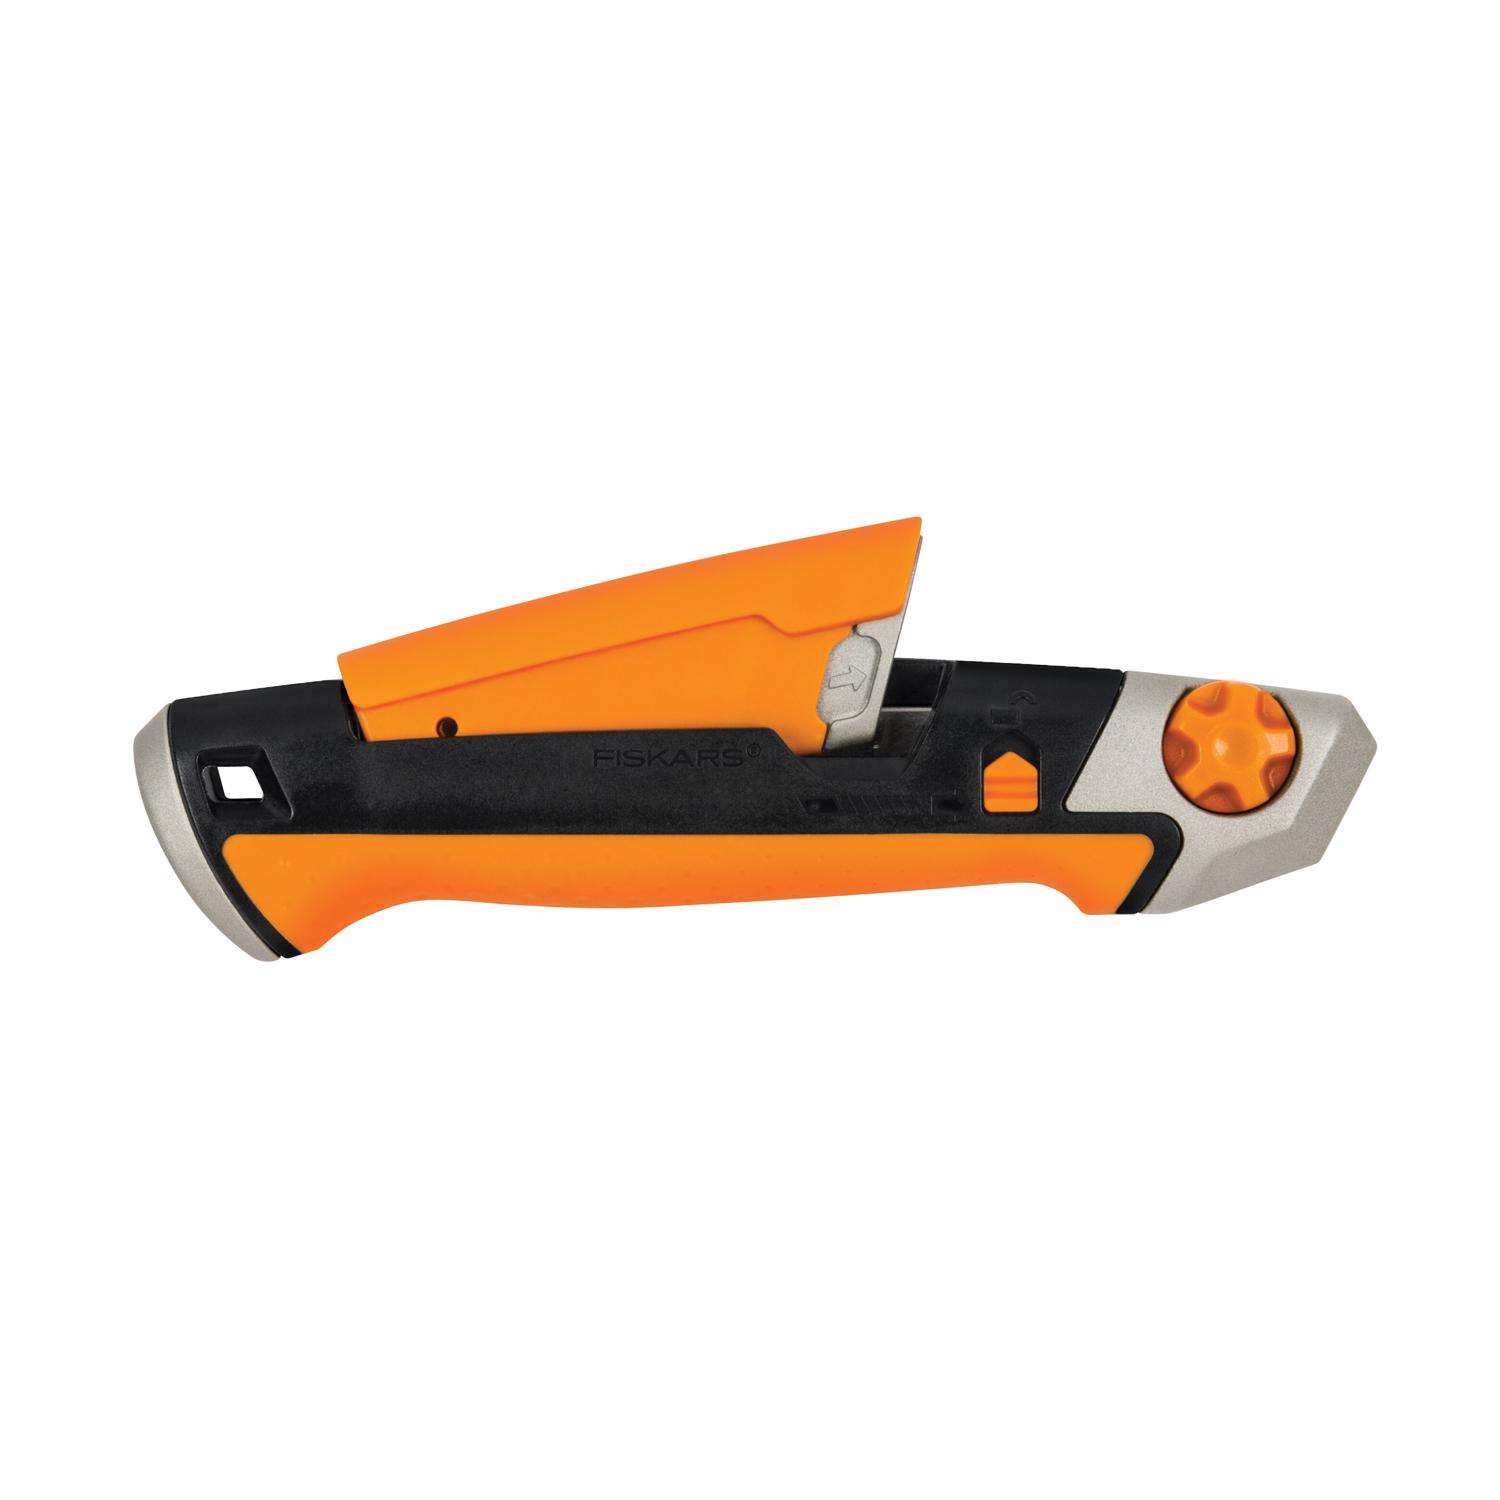 Fiskars Folding Comact Utility Knife - Dry It Center